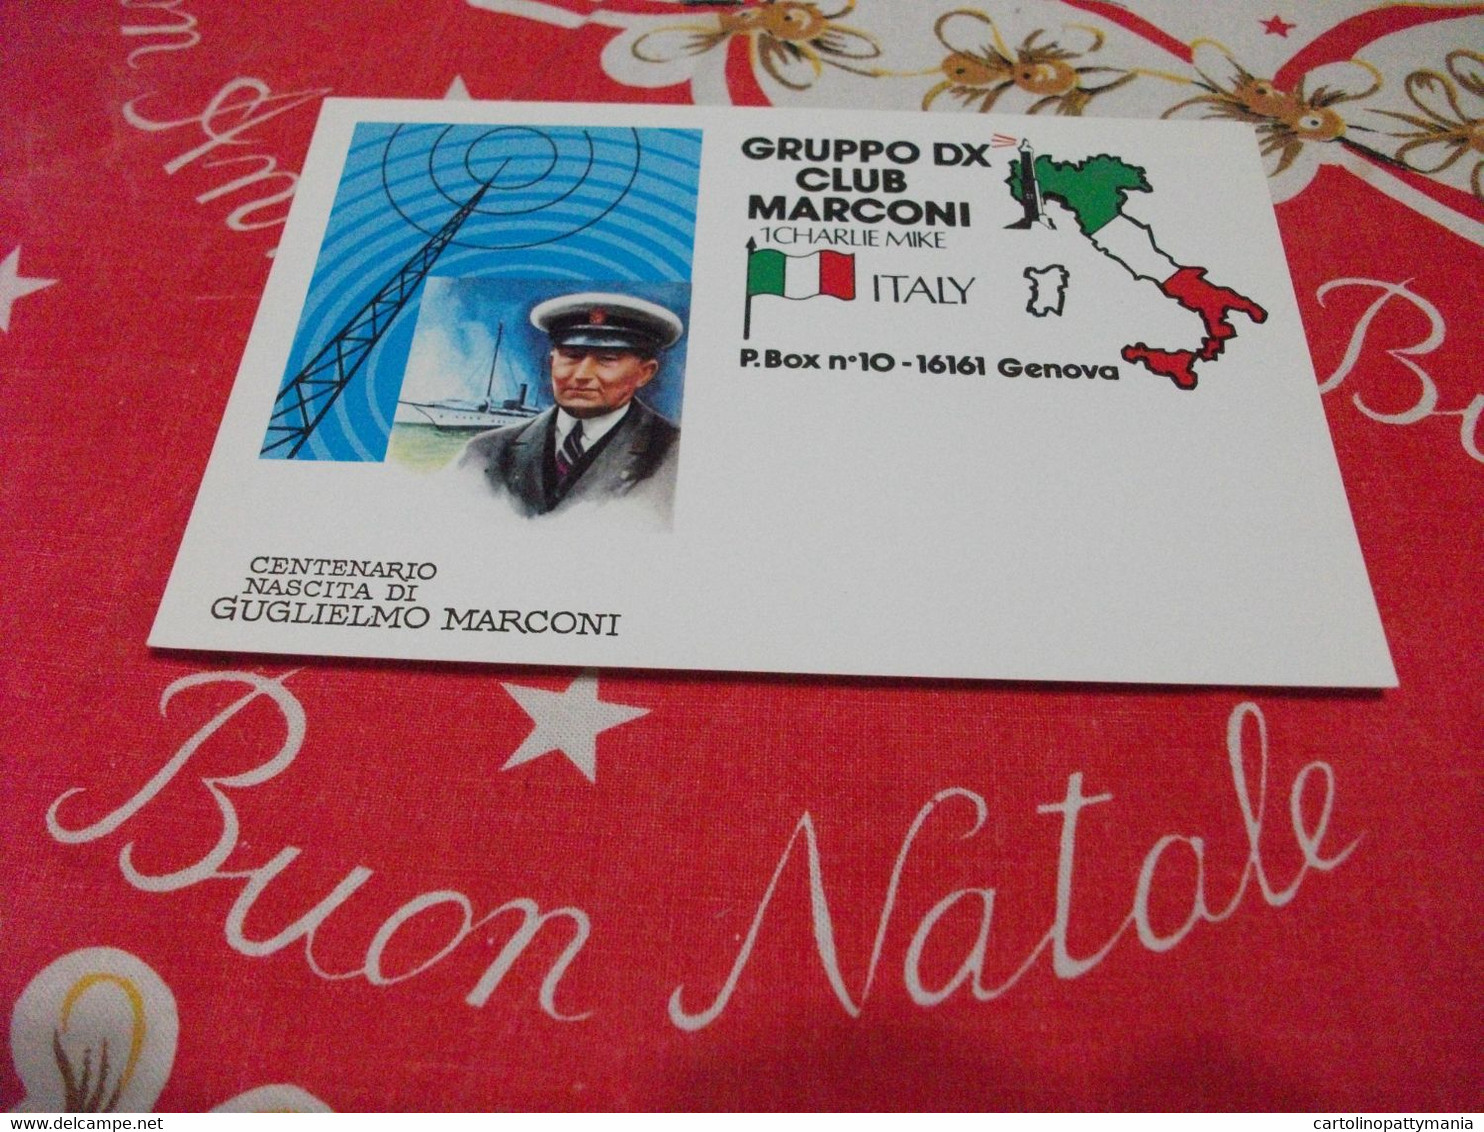 Centenario Nascita Di Guglielmo Marconi QLS GRUPPODX CLUB MARCONI NOBEL PER LA FISICA 1909 - Nobel Prize Laureates